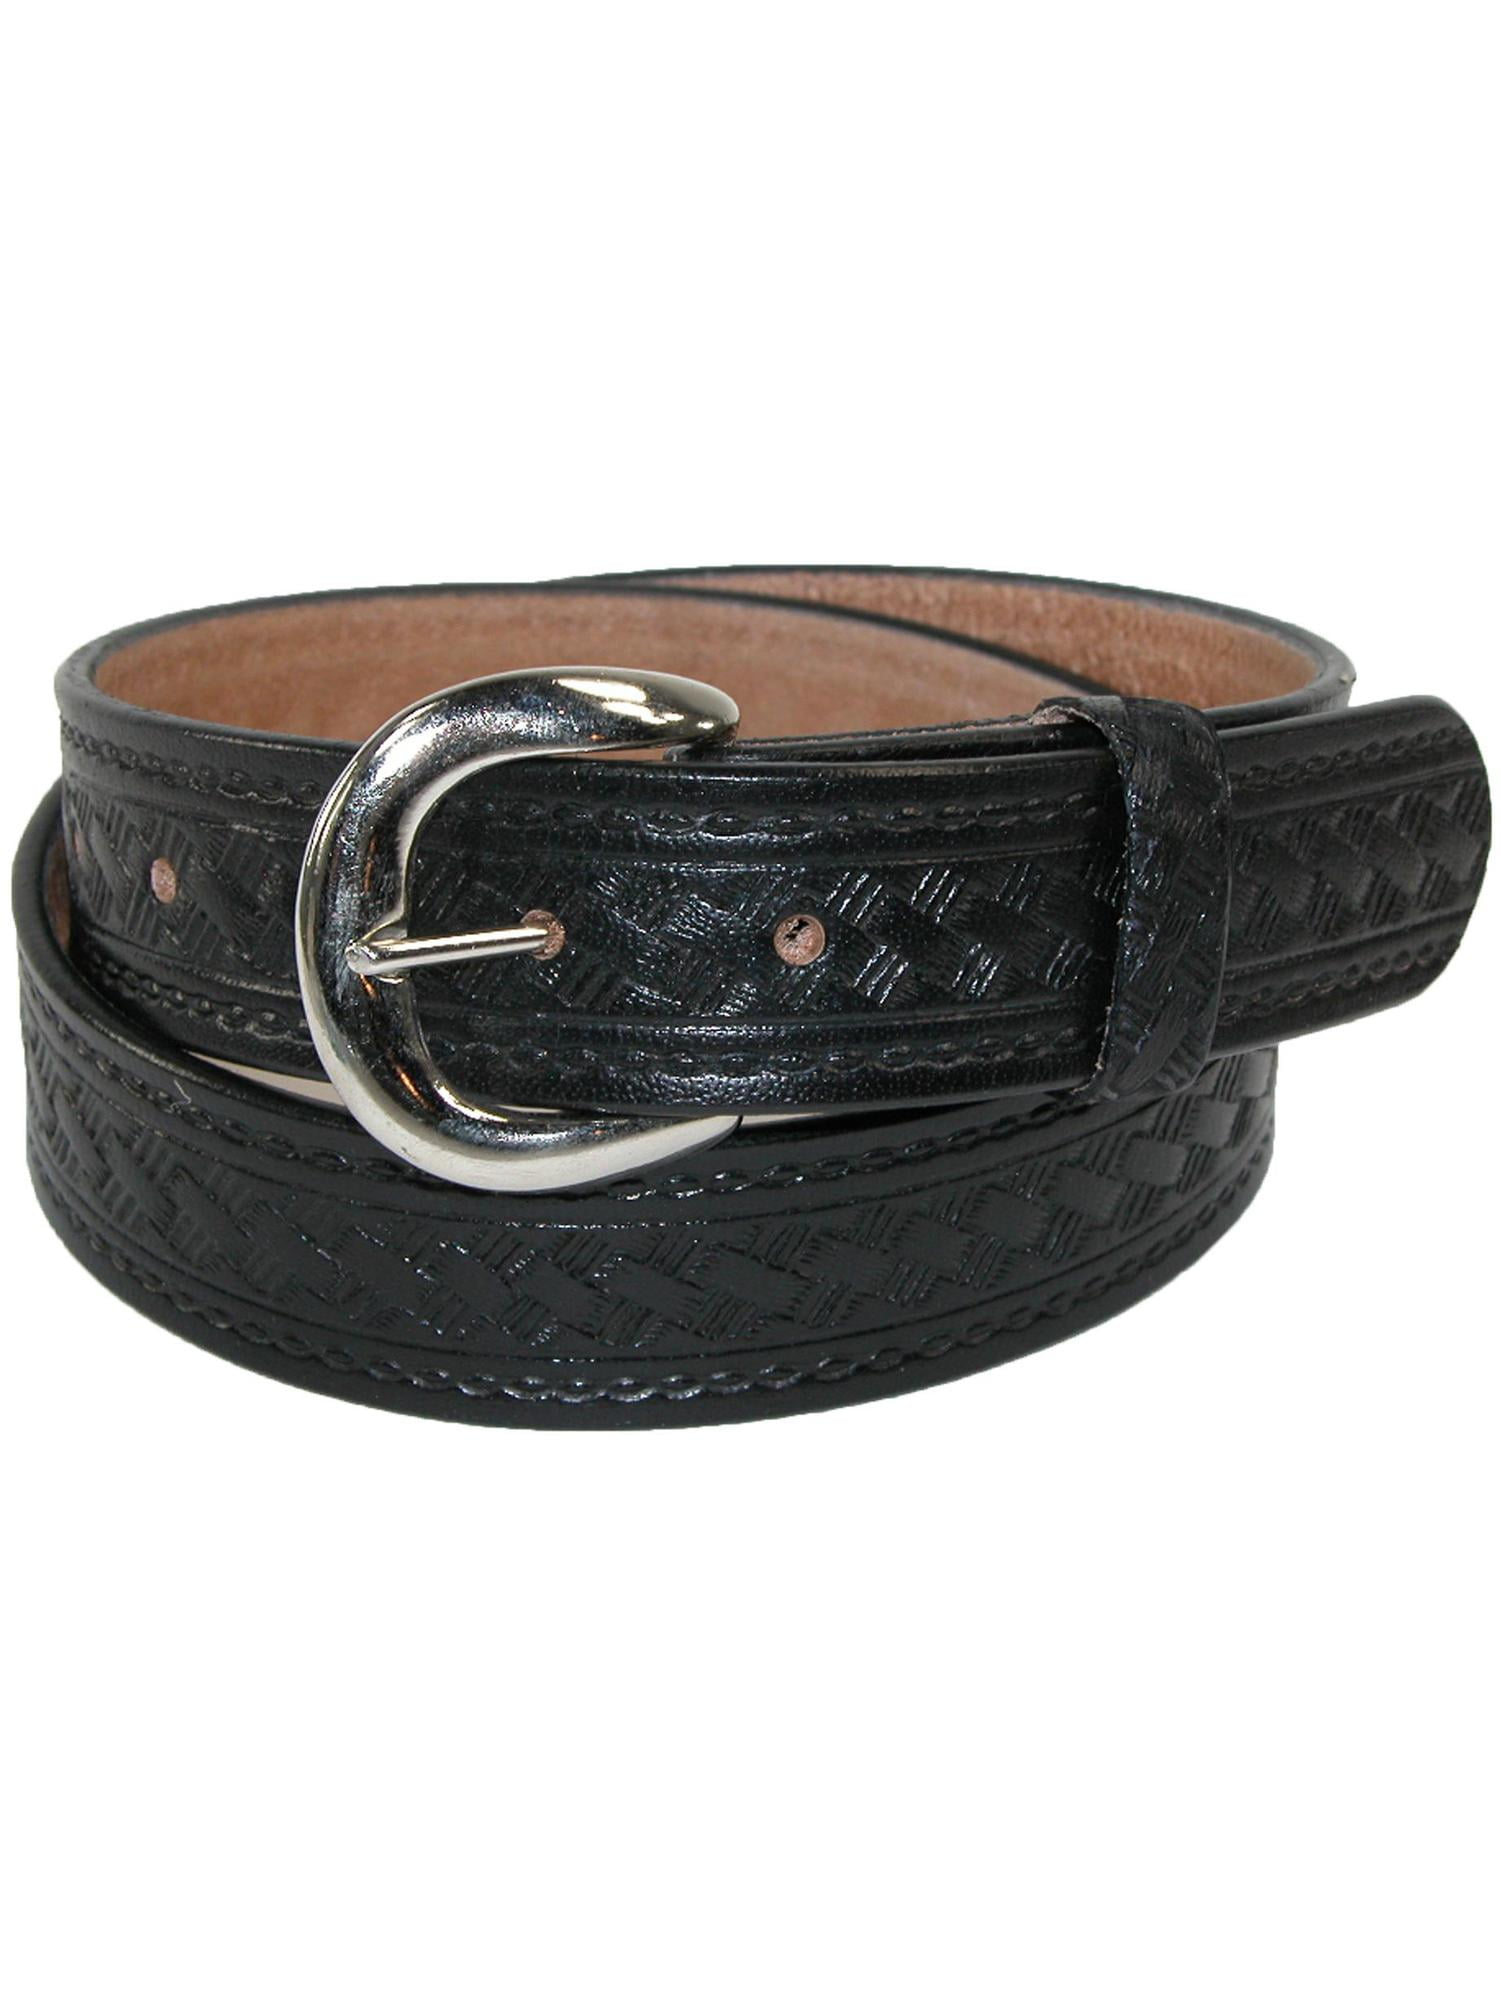 Leather Belt For Men Cowboy Automatic Belt Buckles Waist Dress Black Belts 48" 